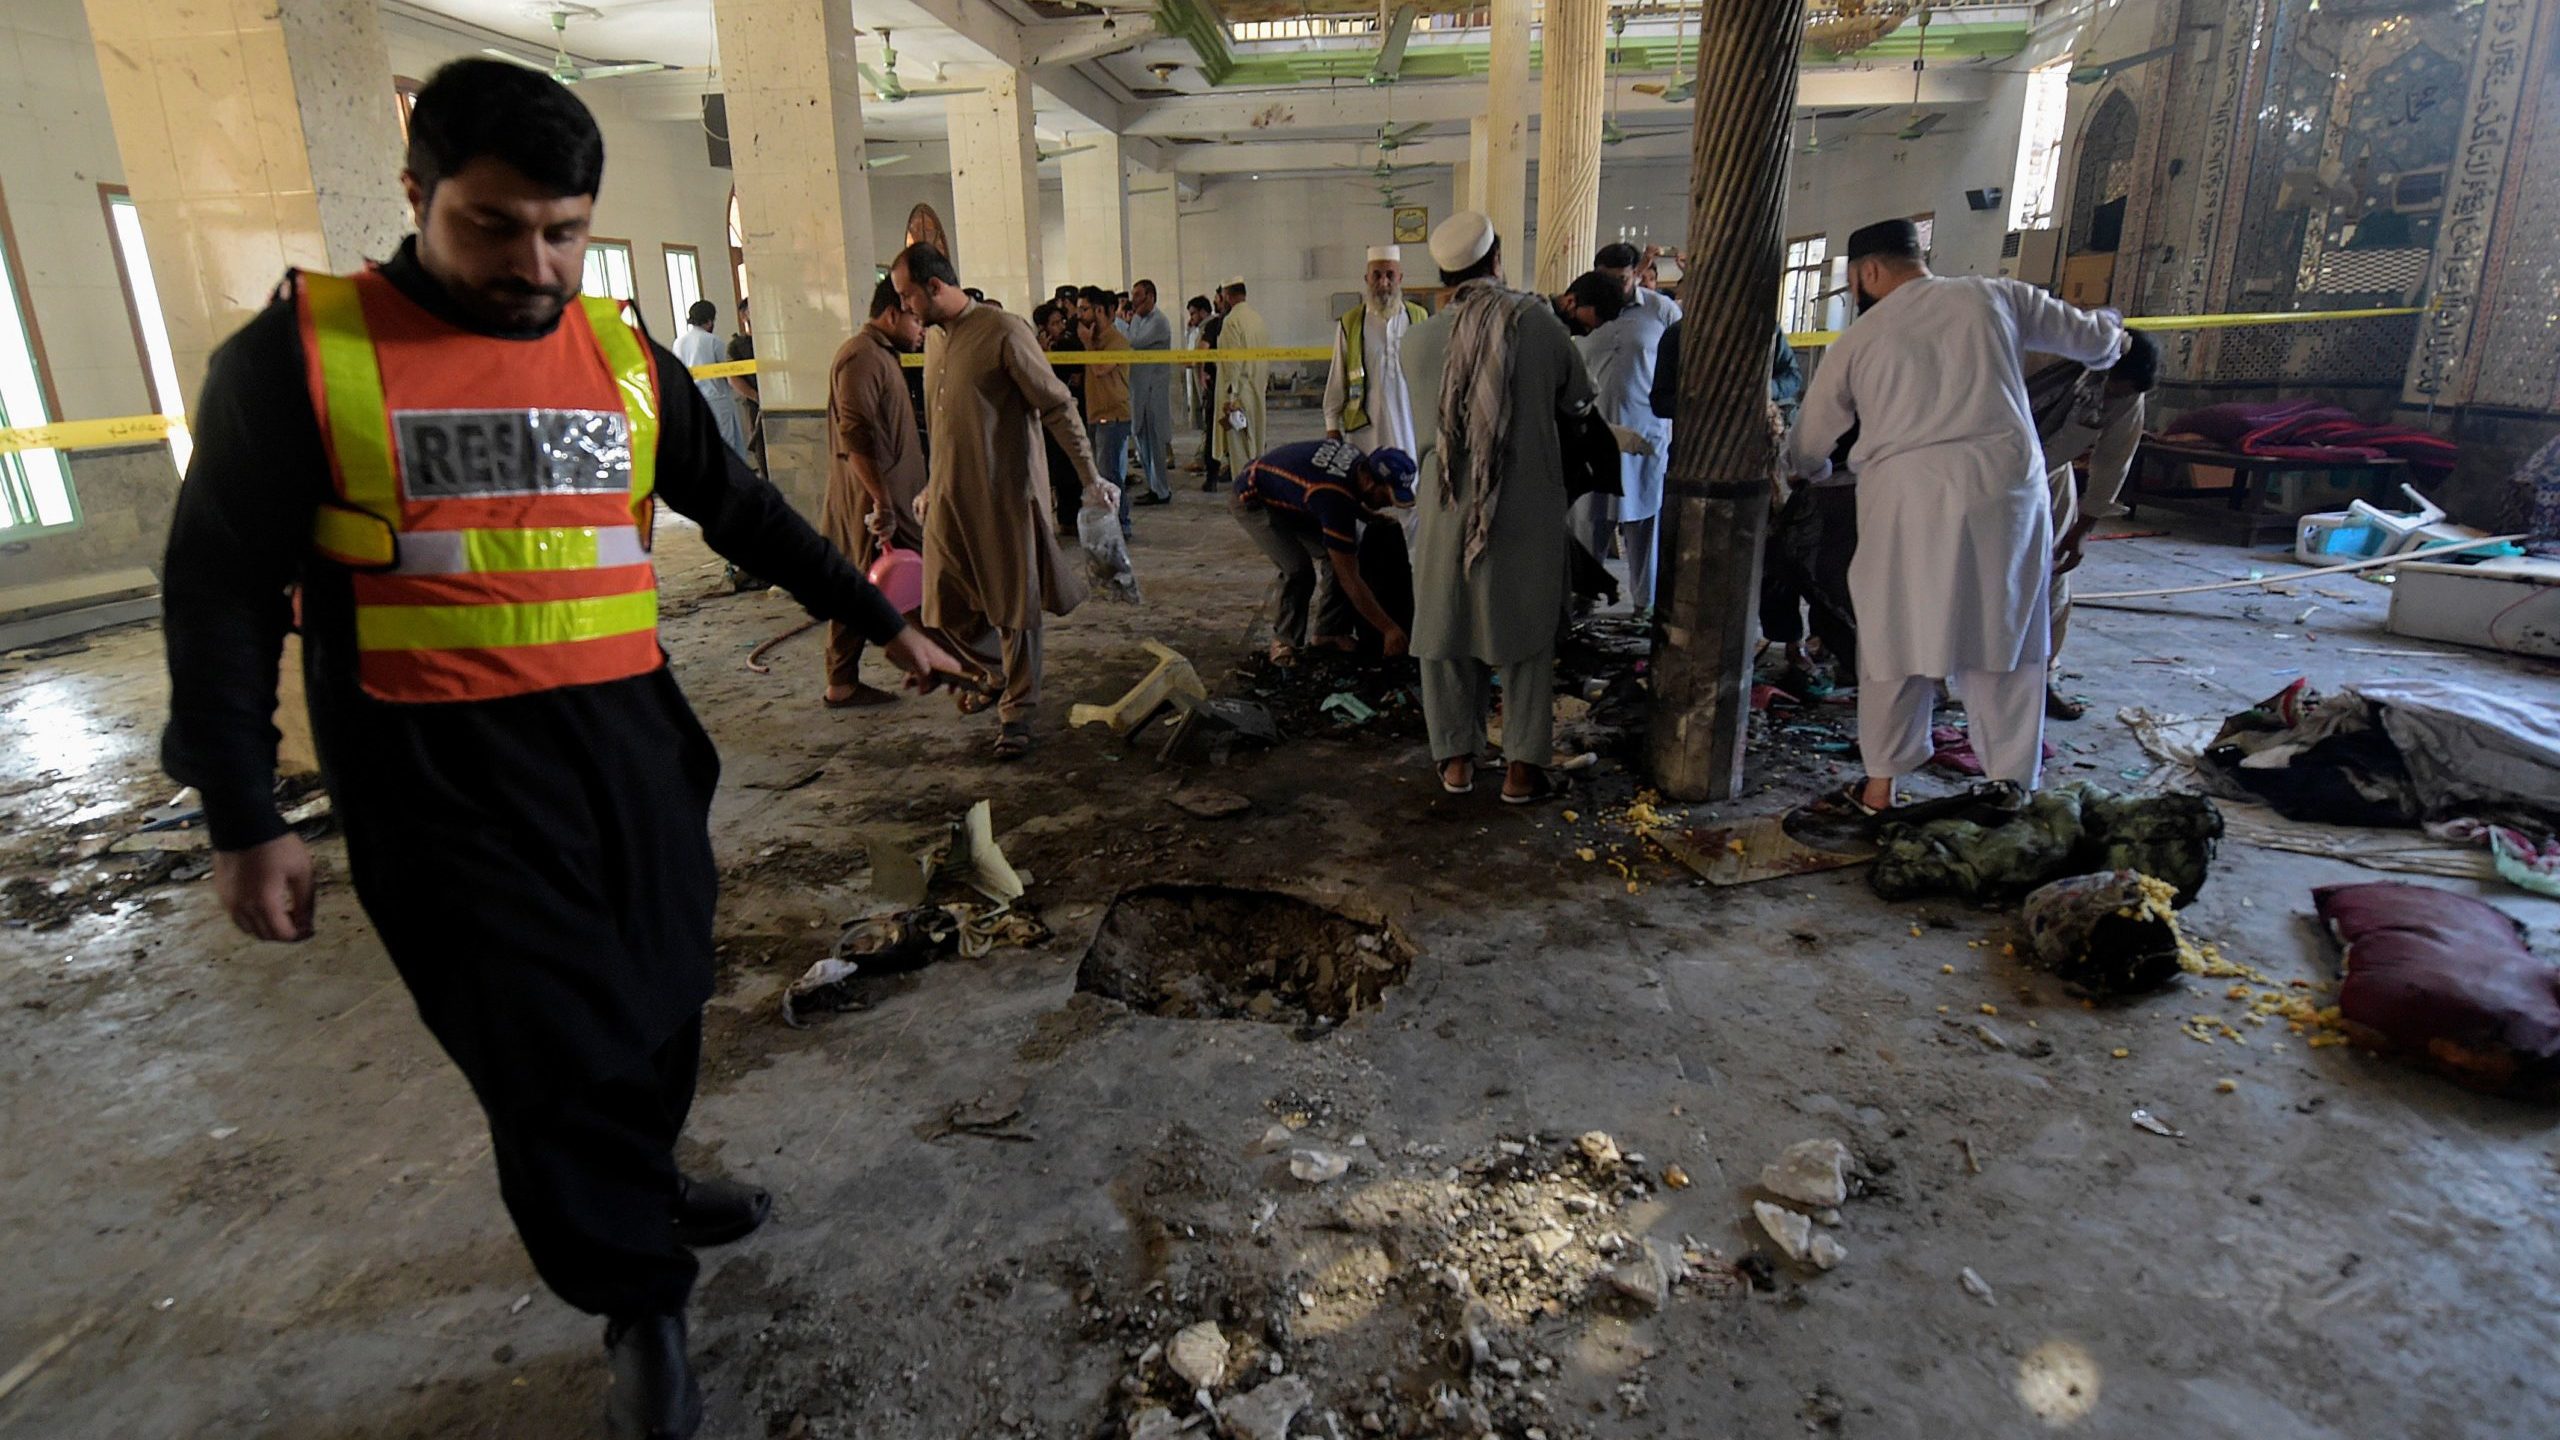 Terror Bombing Shakes Religious School in Pakistan